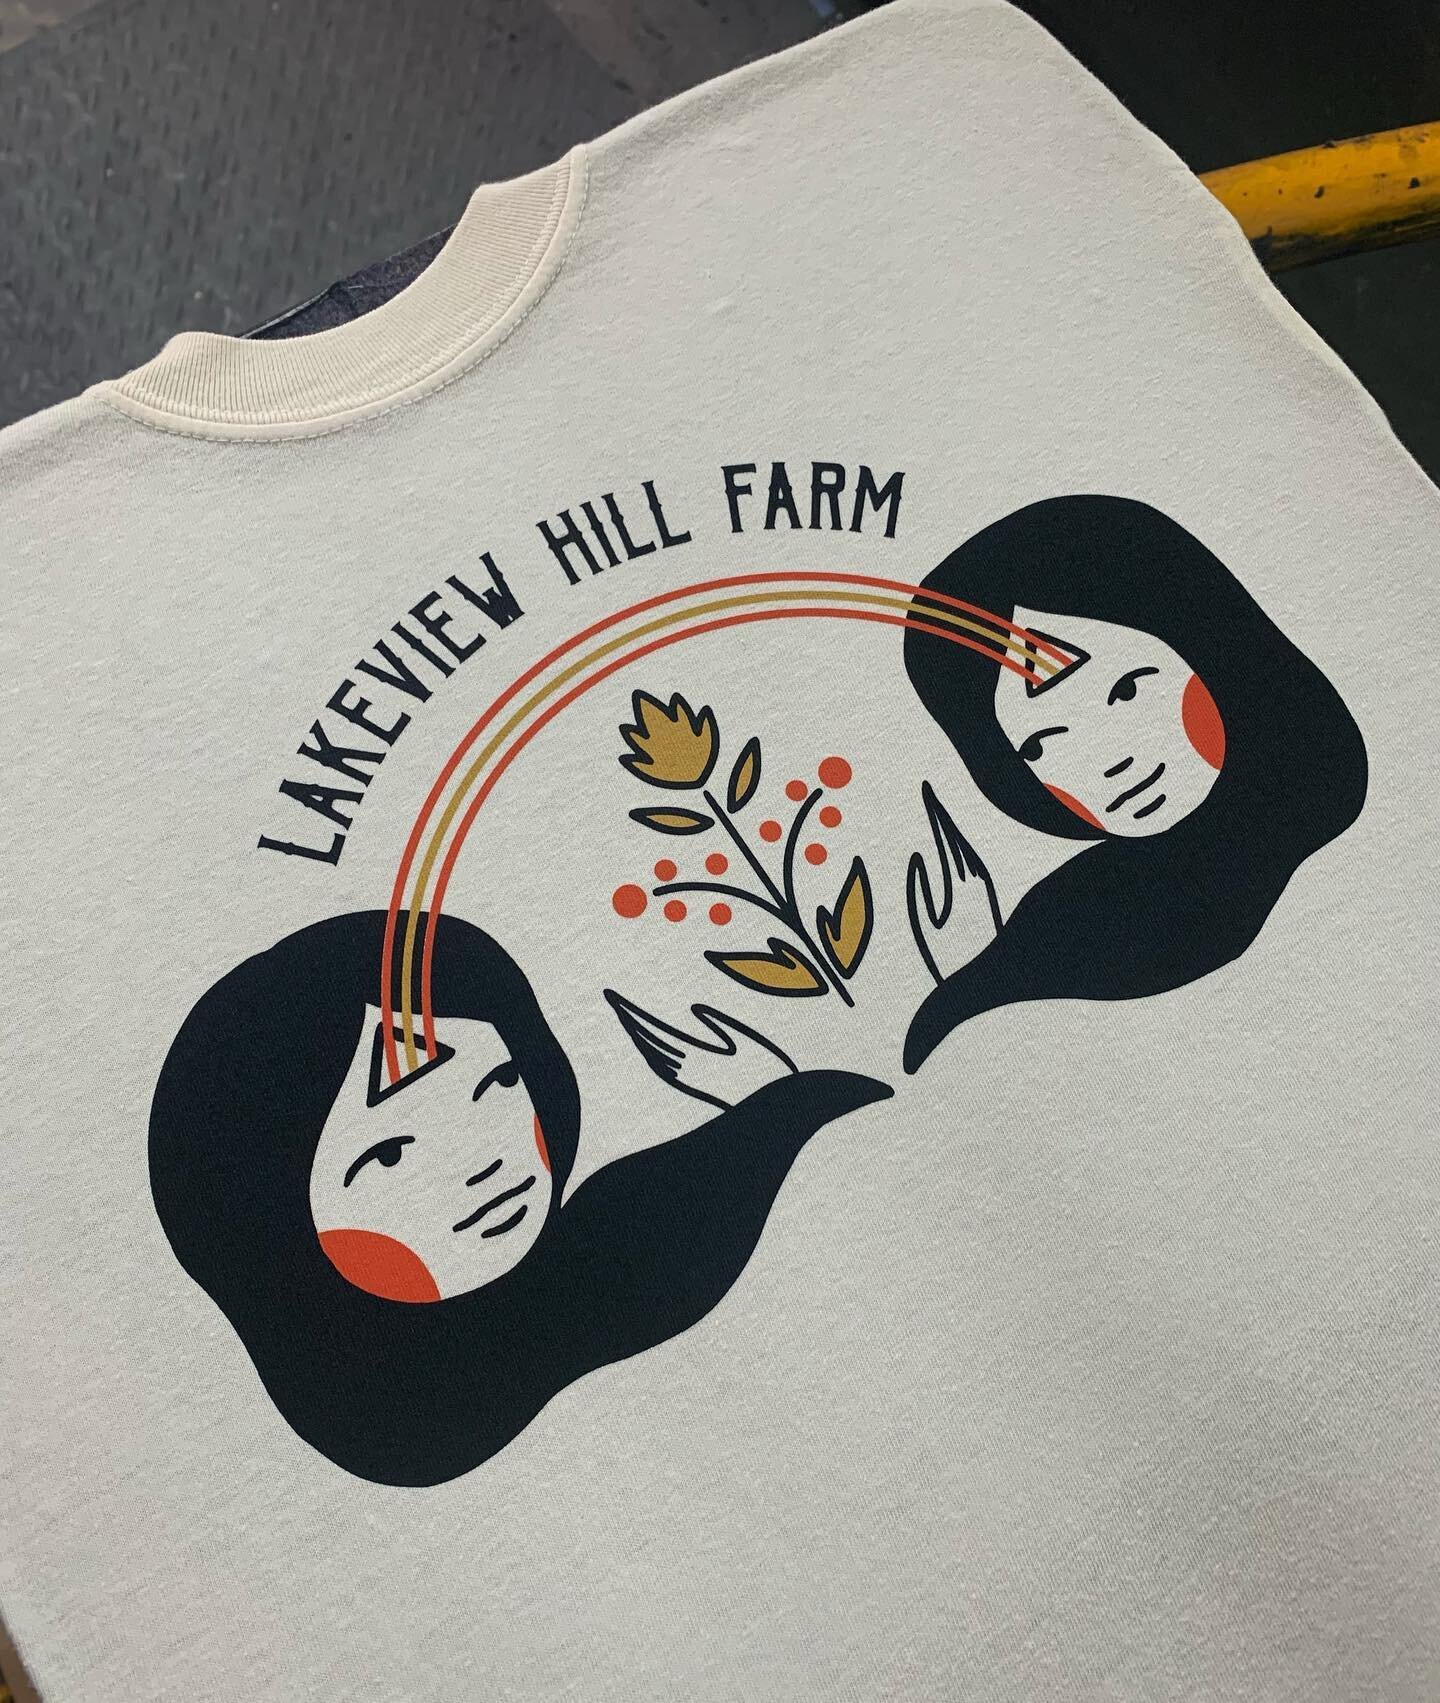 Always awesome printing @emrandalll art!! Banger of a shirt design for @lakeviewhillfarm in MI.
.
.
.
#emrandall #lakeviewhillfarm #michigan #screenprinting #tshirt #print #farm #jensoncreative #anatol